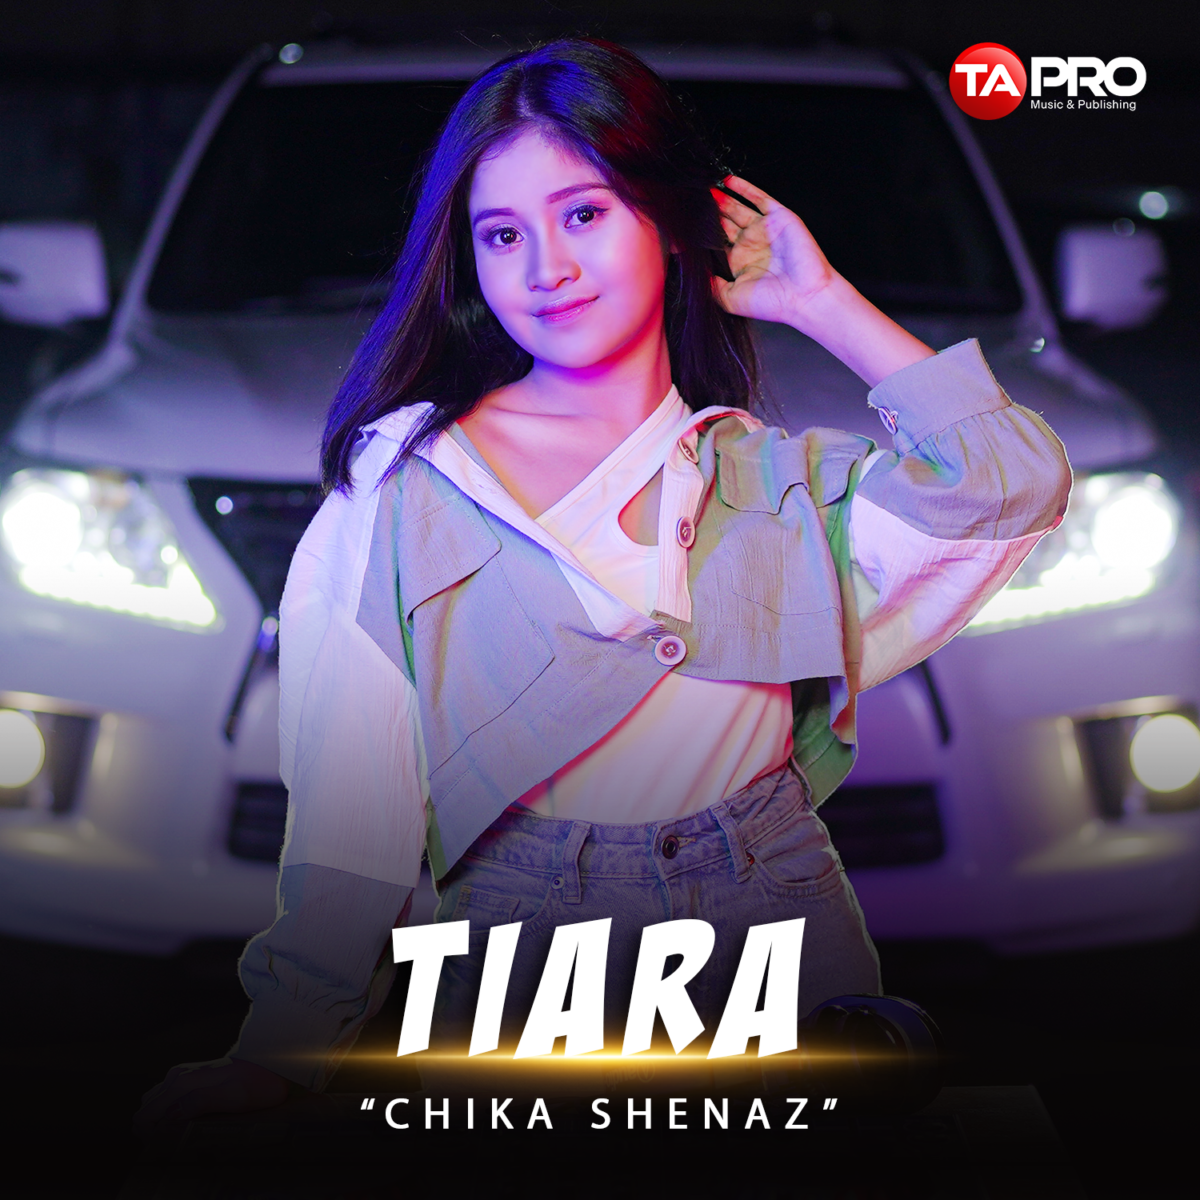 Rilisan Terbaru Chika Shenaz Berjudul Tiara, Netizen Auto Joged